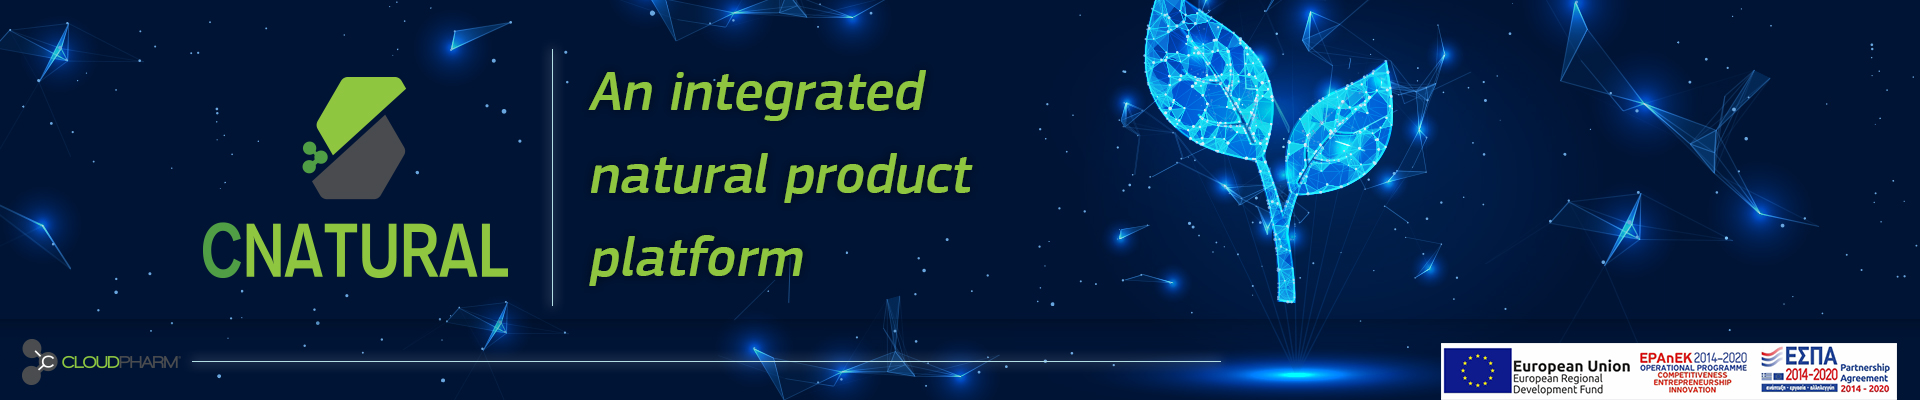 CNatural an integrated natural product platform